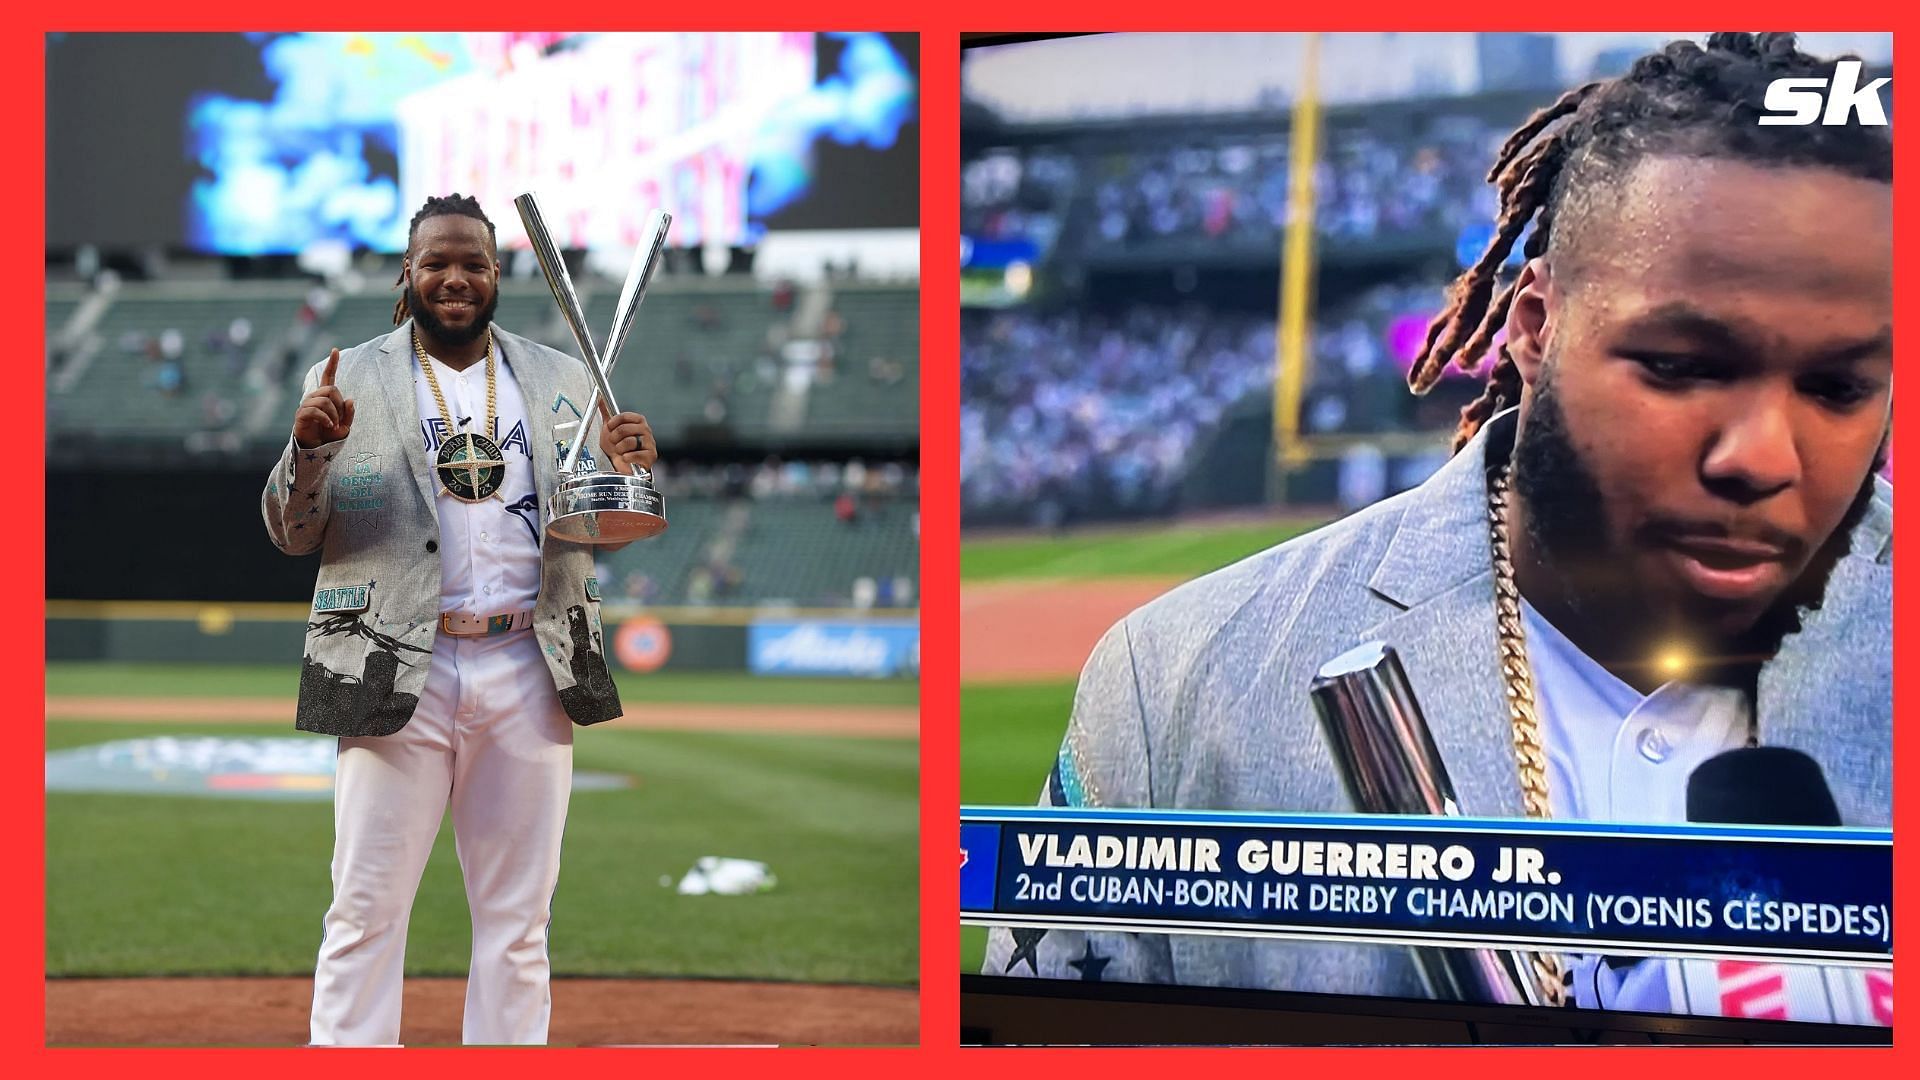 MLB Twitter slams ESPN after graphic shows Vladimir Guerrero Jr